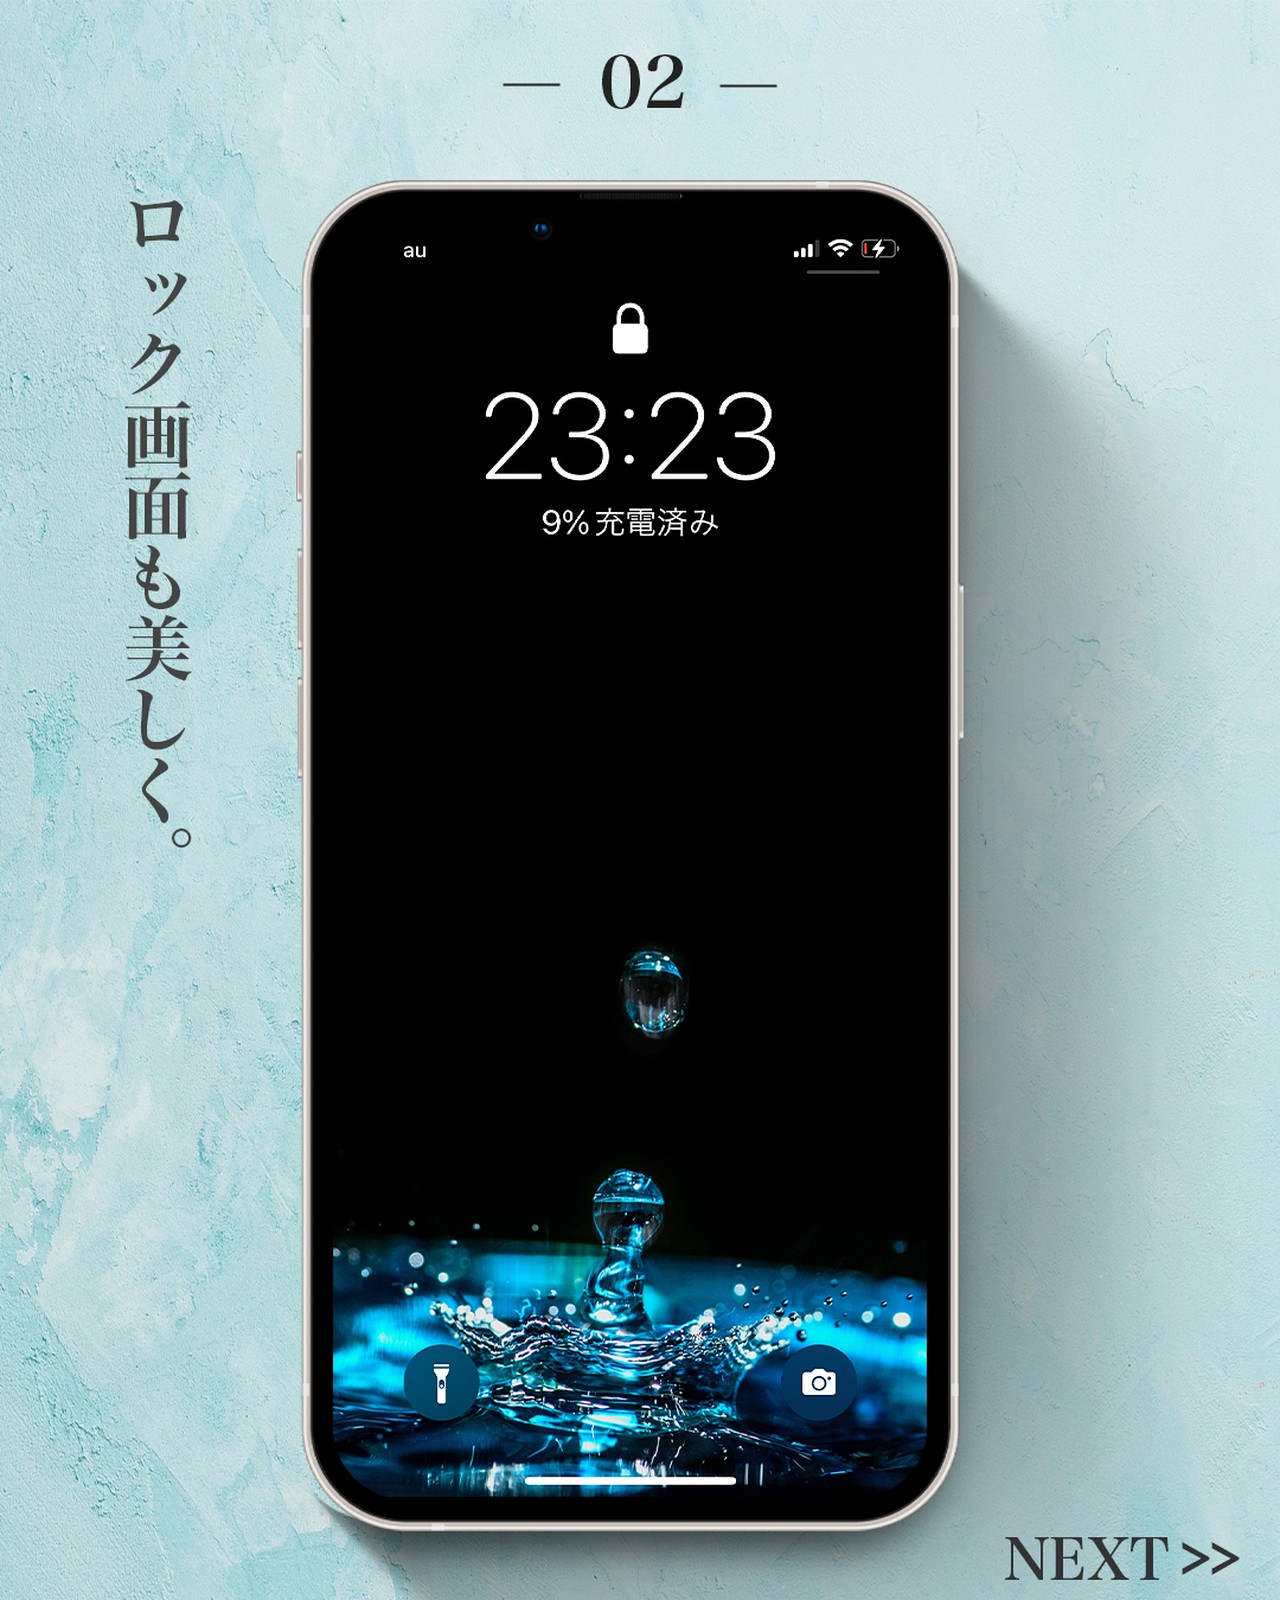 Lemon8 Story Iphone壁紙おしゃれベージュ系